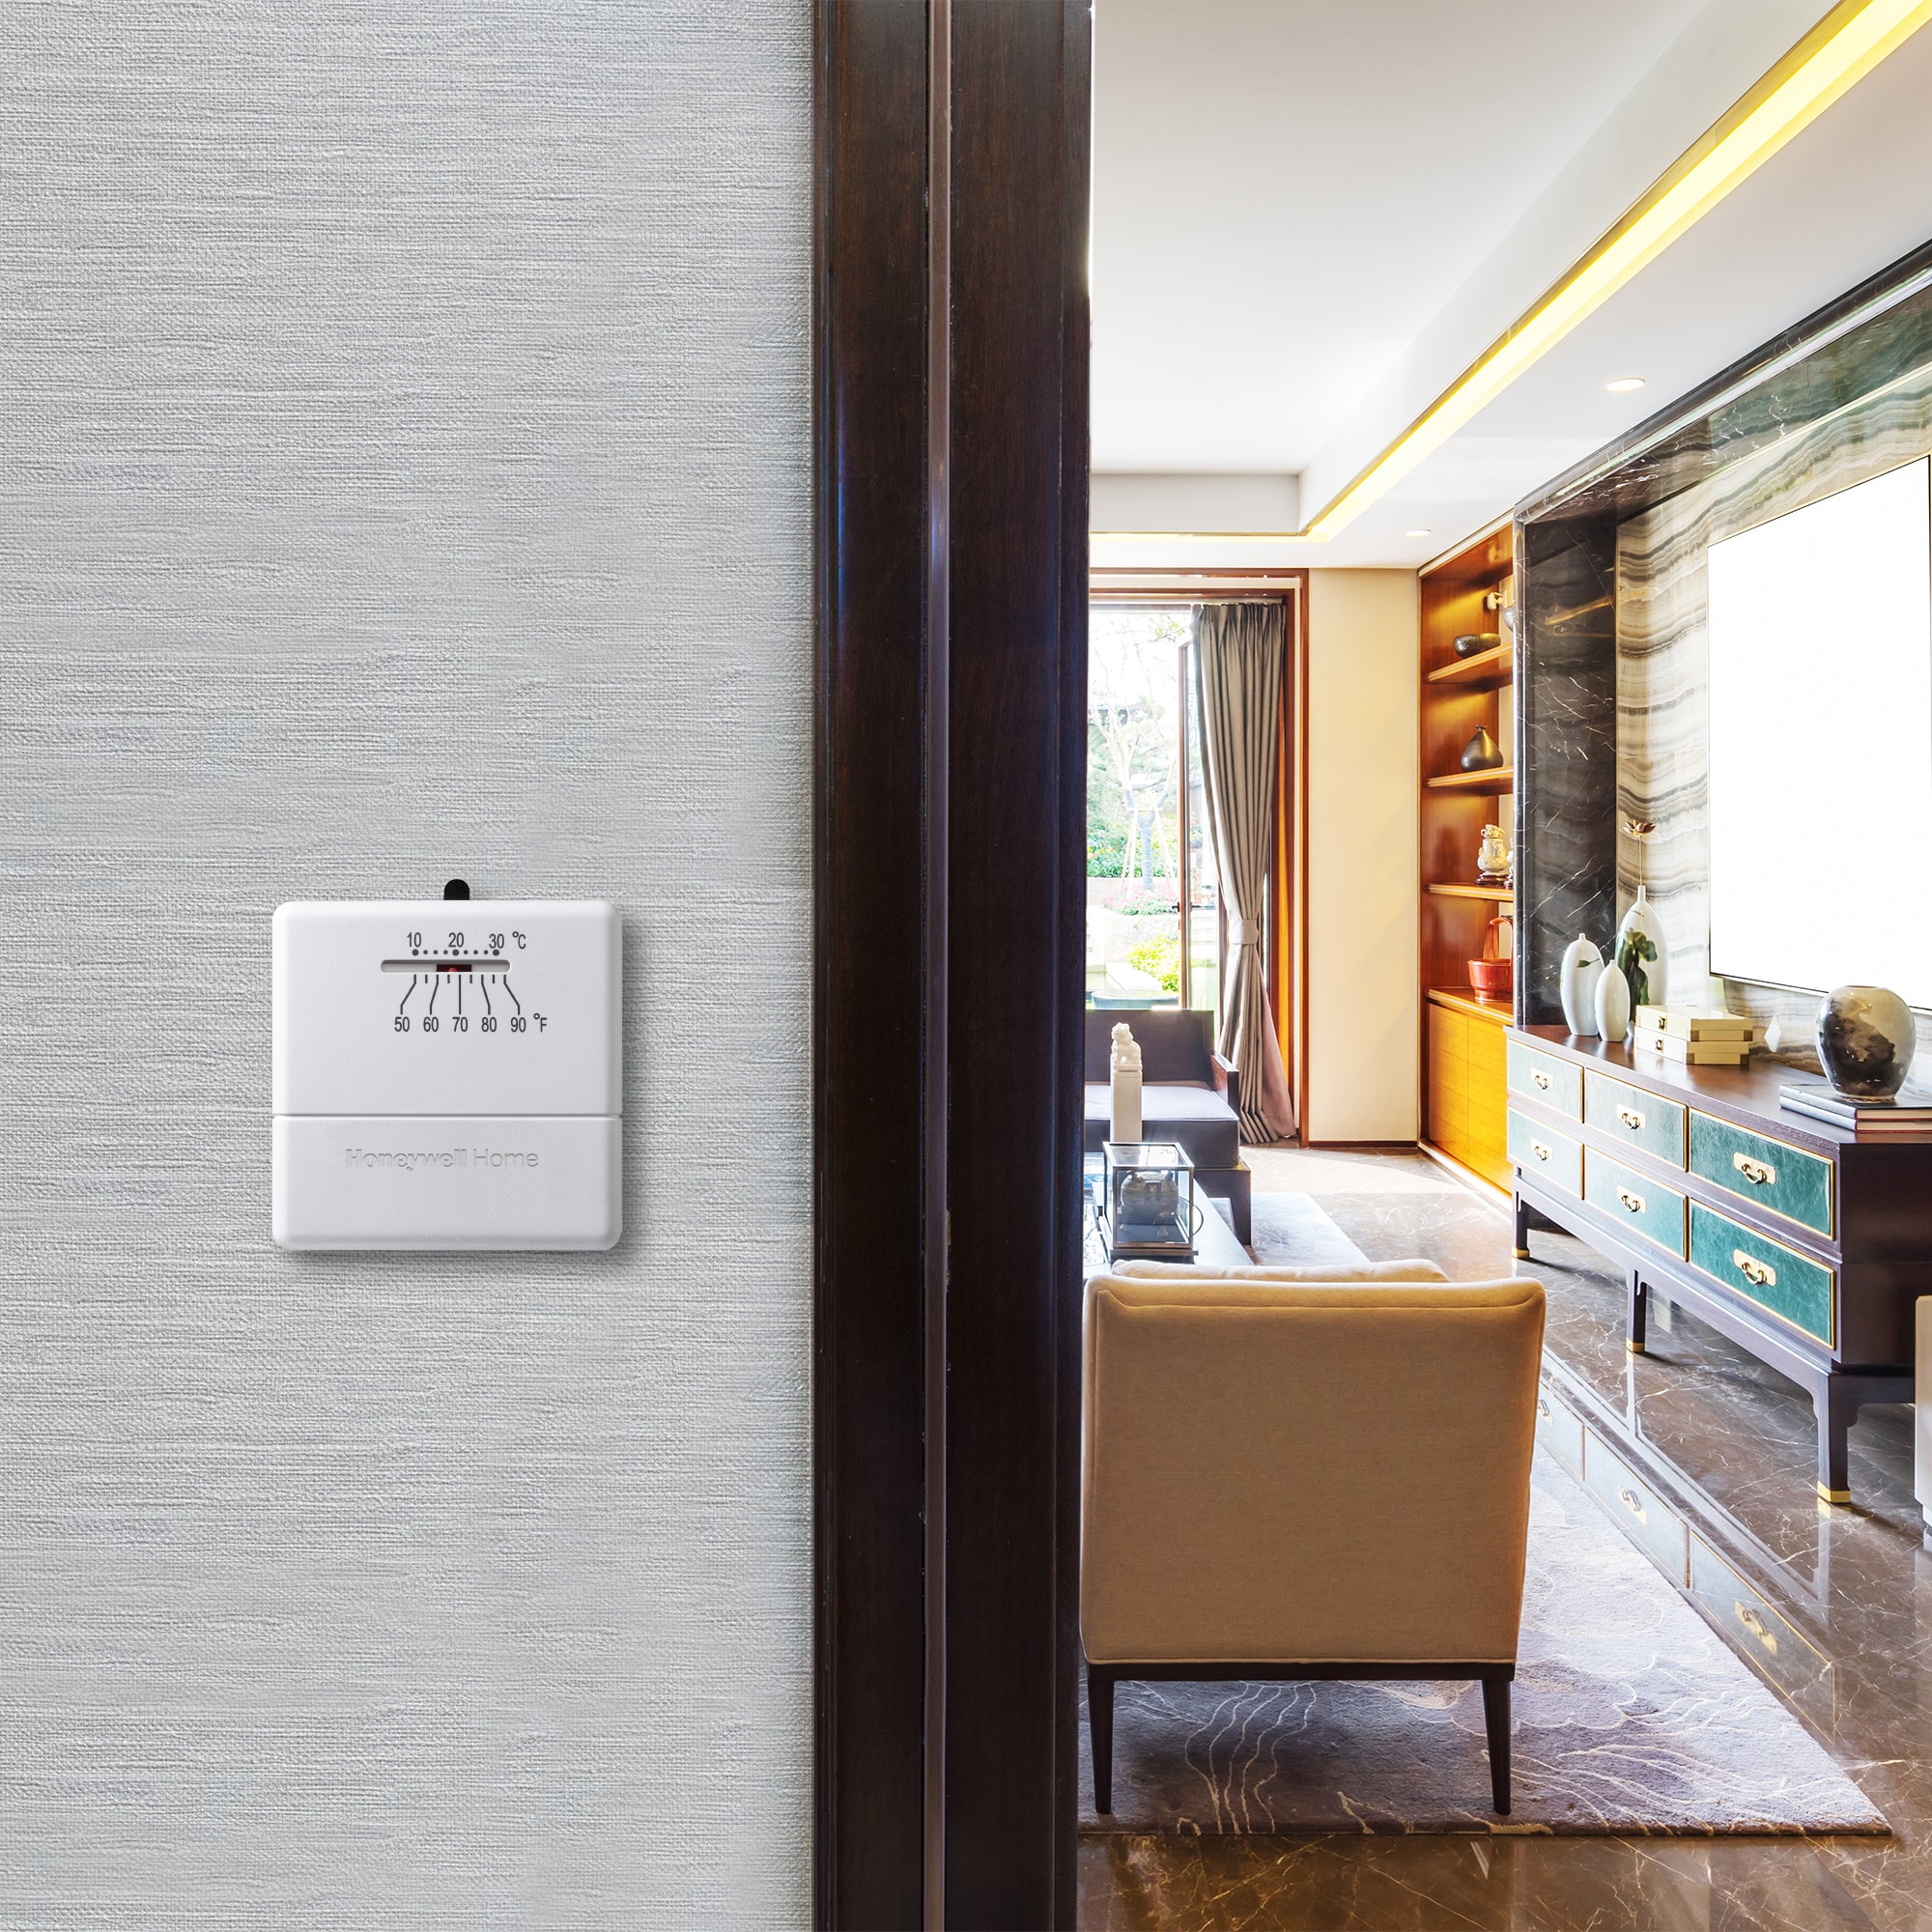 mechanical honeywell hotel room temperature thermostat